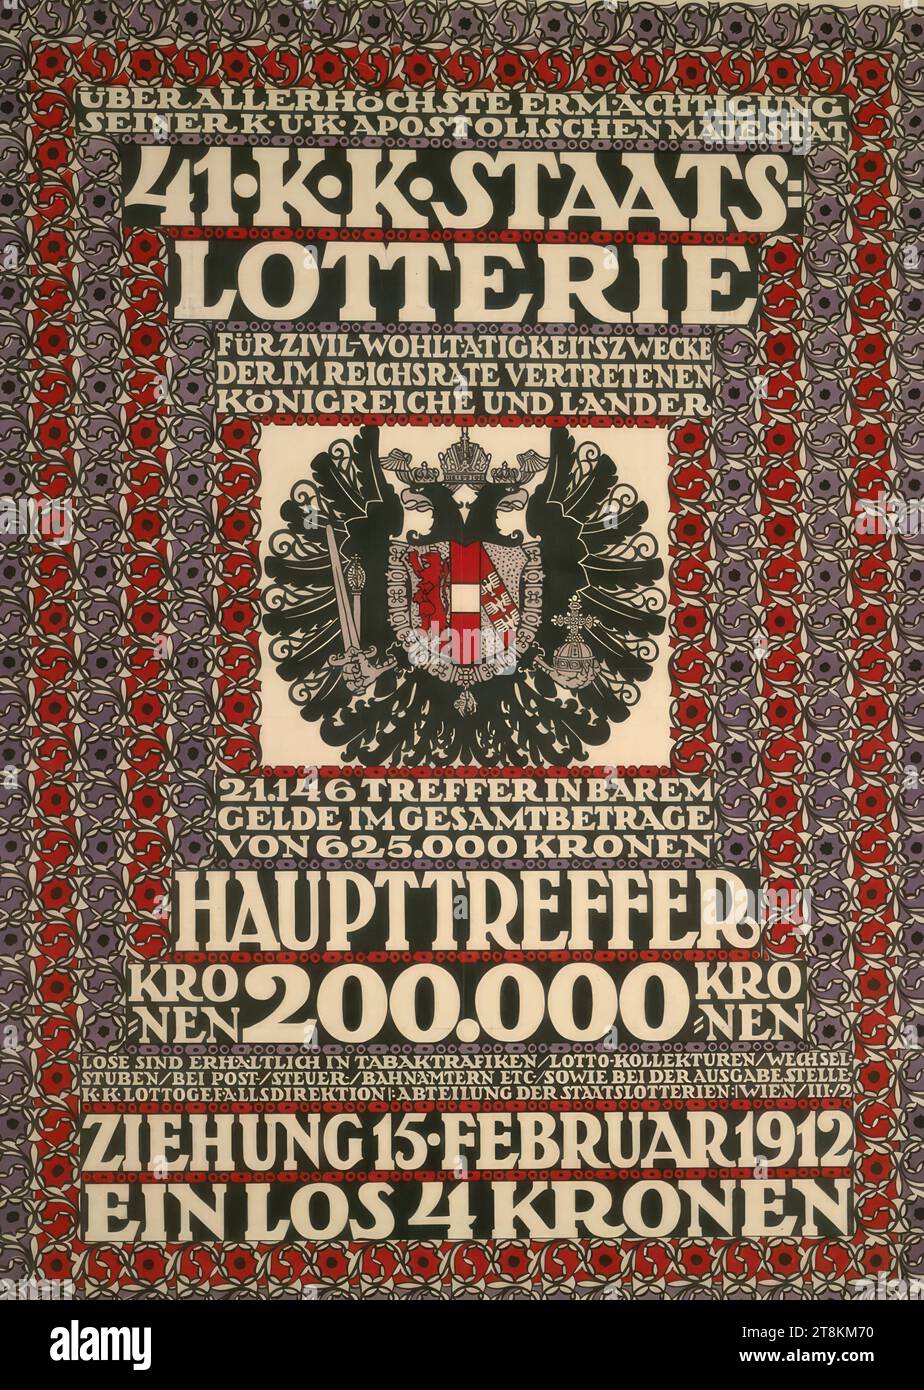 41. K. K. STATE LOTTERY; DRAW FEBRUARY 15, 1912, Rudolf Junk, Vienna 1880 - 1943 Rekawinkel, 1912, print, color lithograph, sheet: 1260 mm x 950 mm, Austria Stock Photo